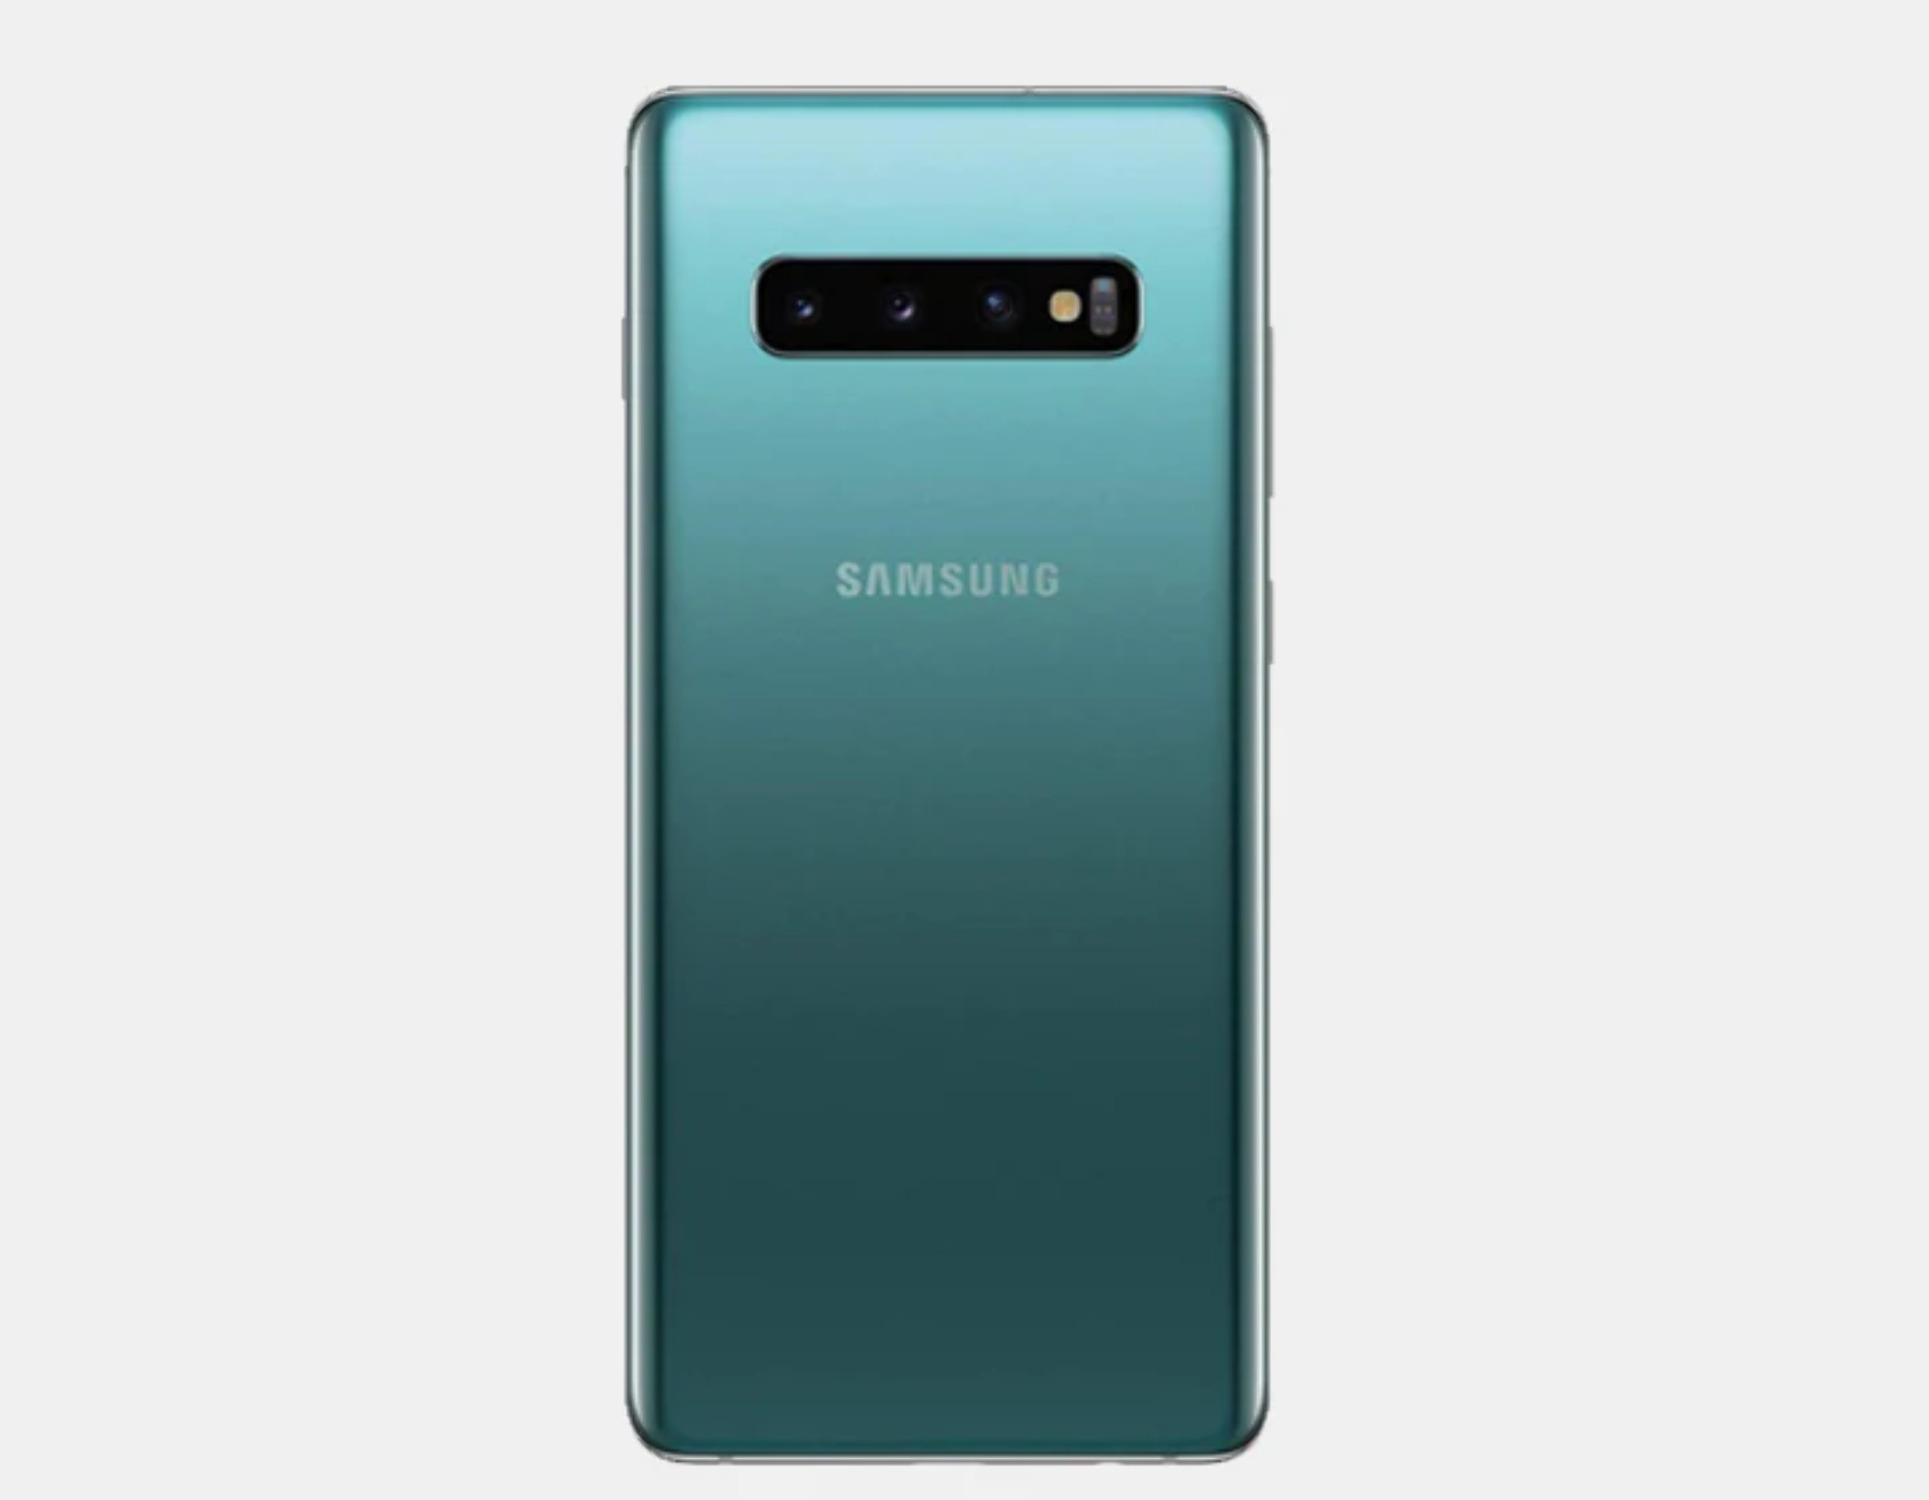 Samsung Galaxy S10 SM-G973F/DS 128GB+8GB Dual SIM Factory Unlocked (Prism Green) - image 2 of 8